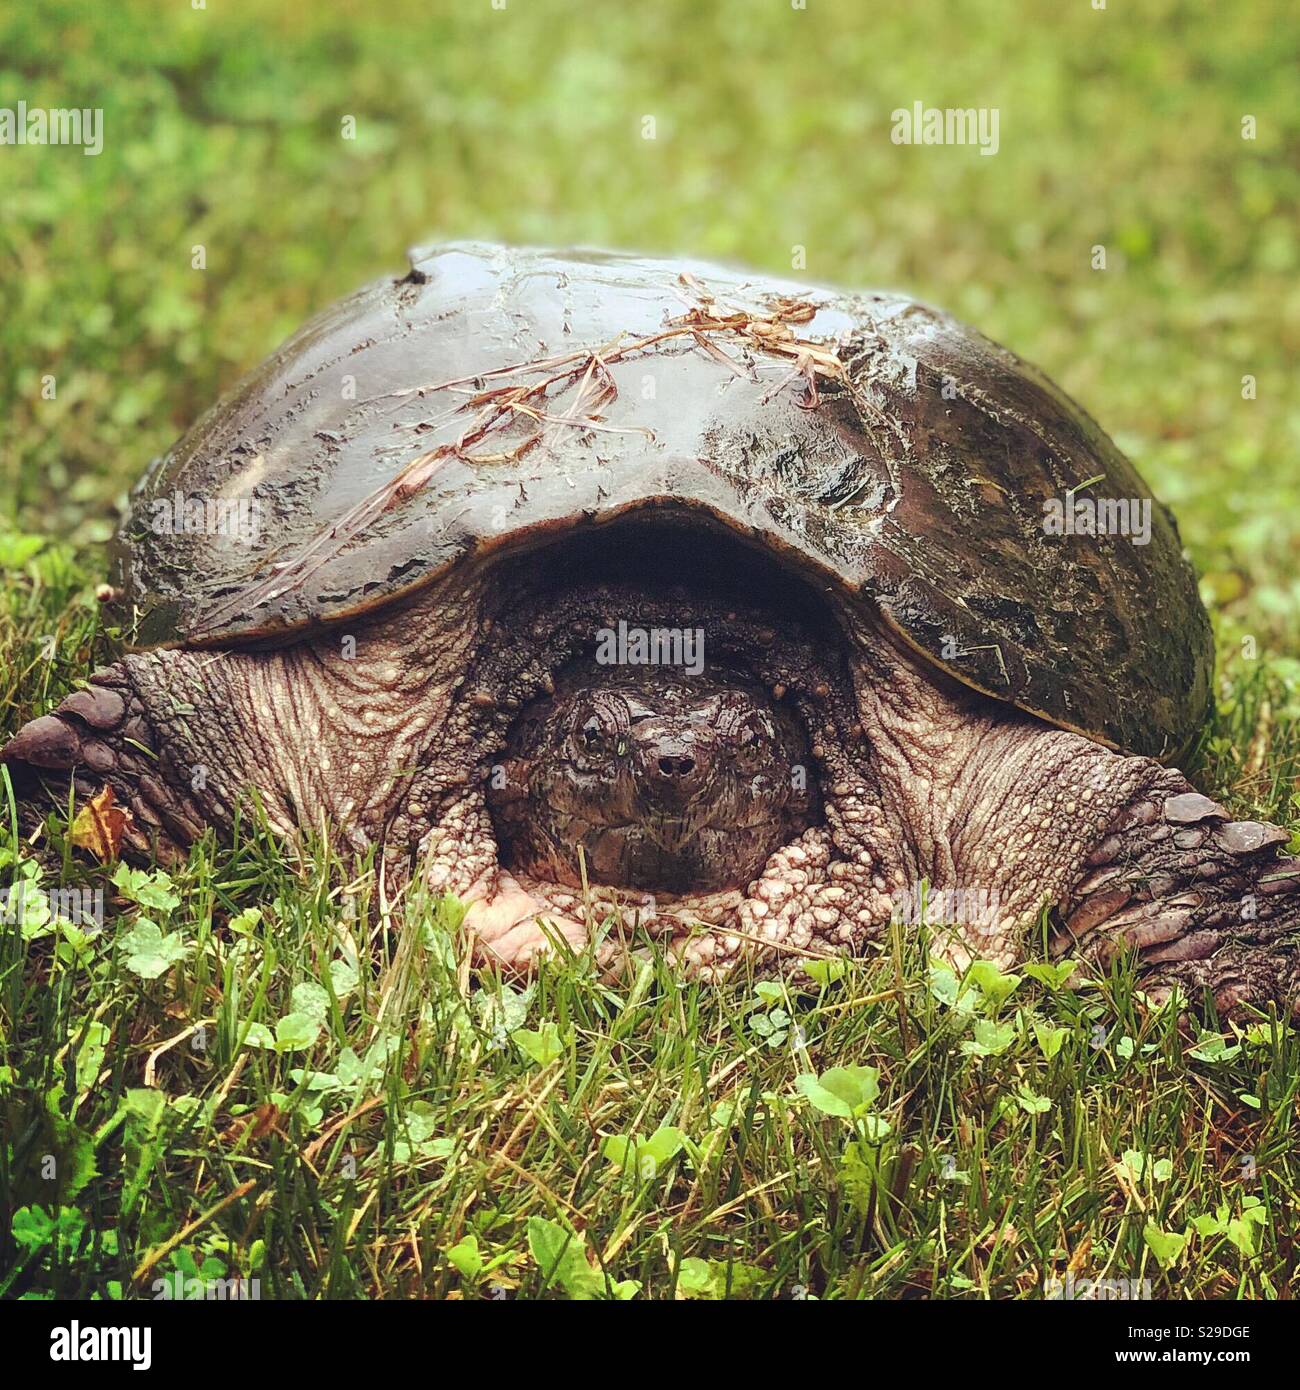 Snapping turtle, Wayne County, Pennsylvania Stock Photo